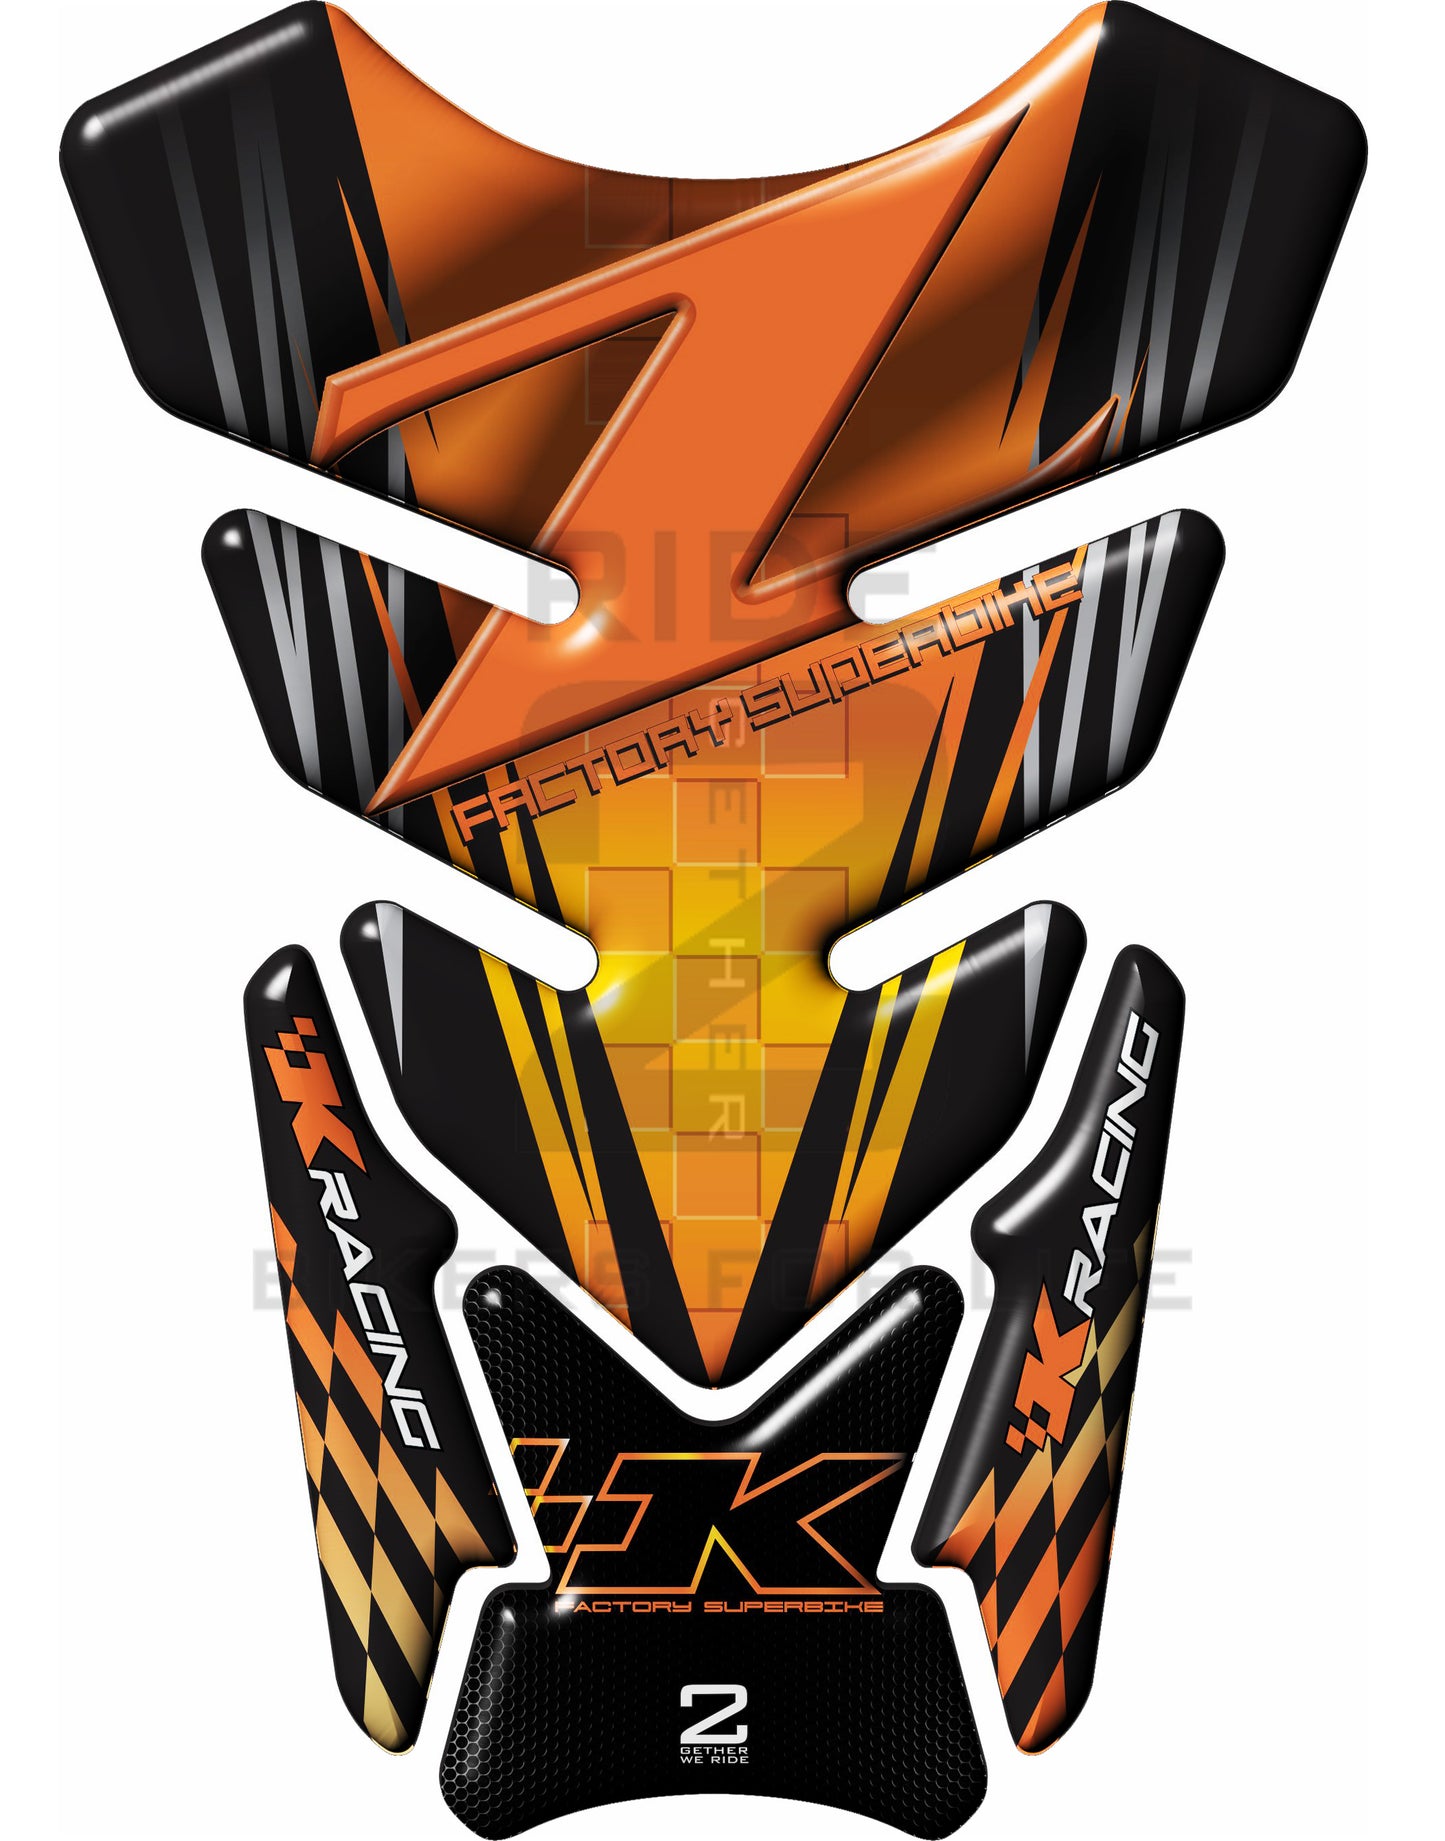 Kawasaki Z Series Orange and Yellow Factory Superbike Tank Pad / Protector 2006 - 2022